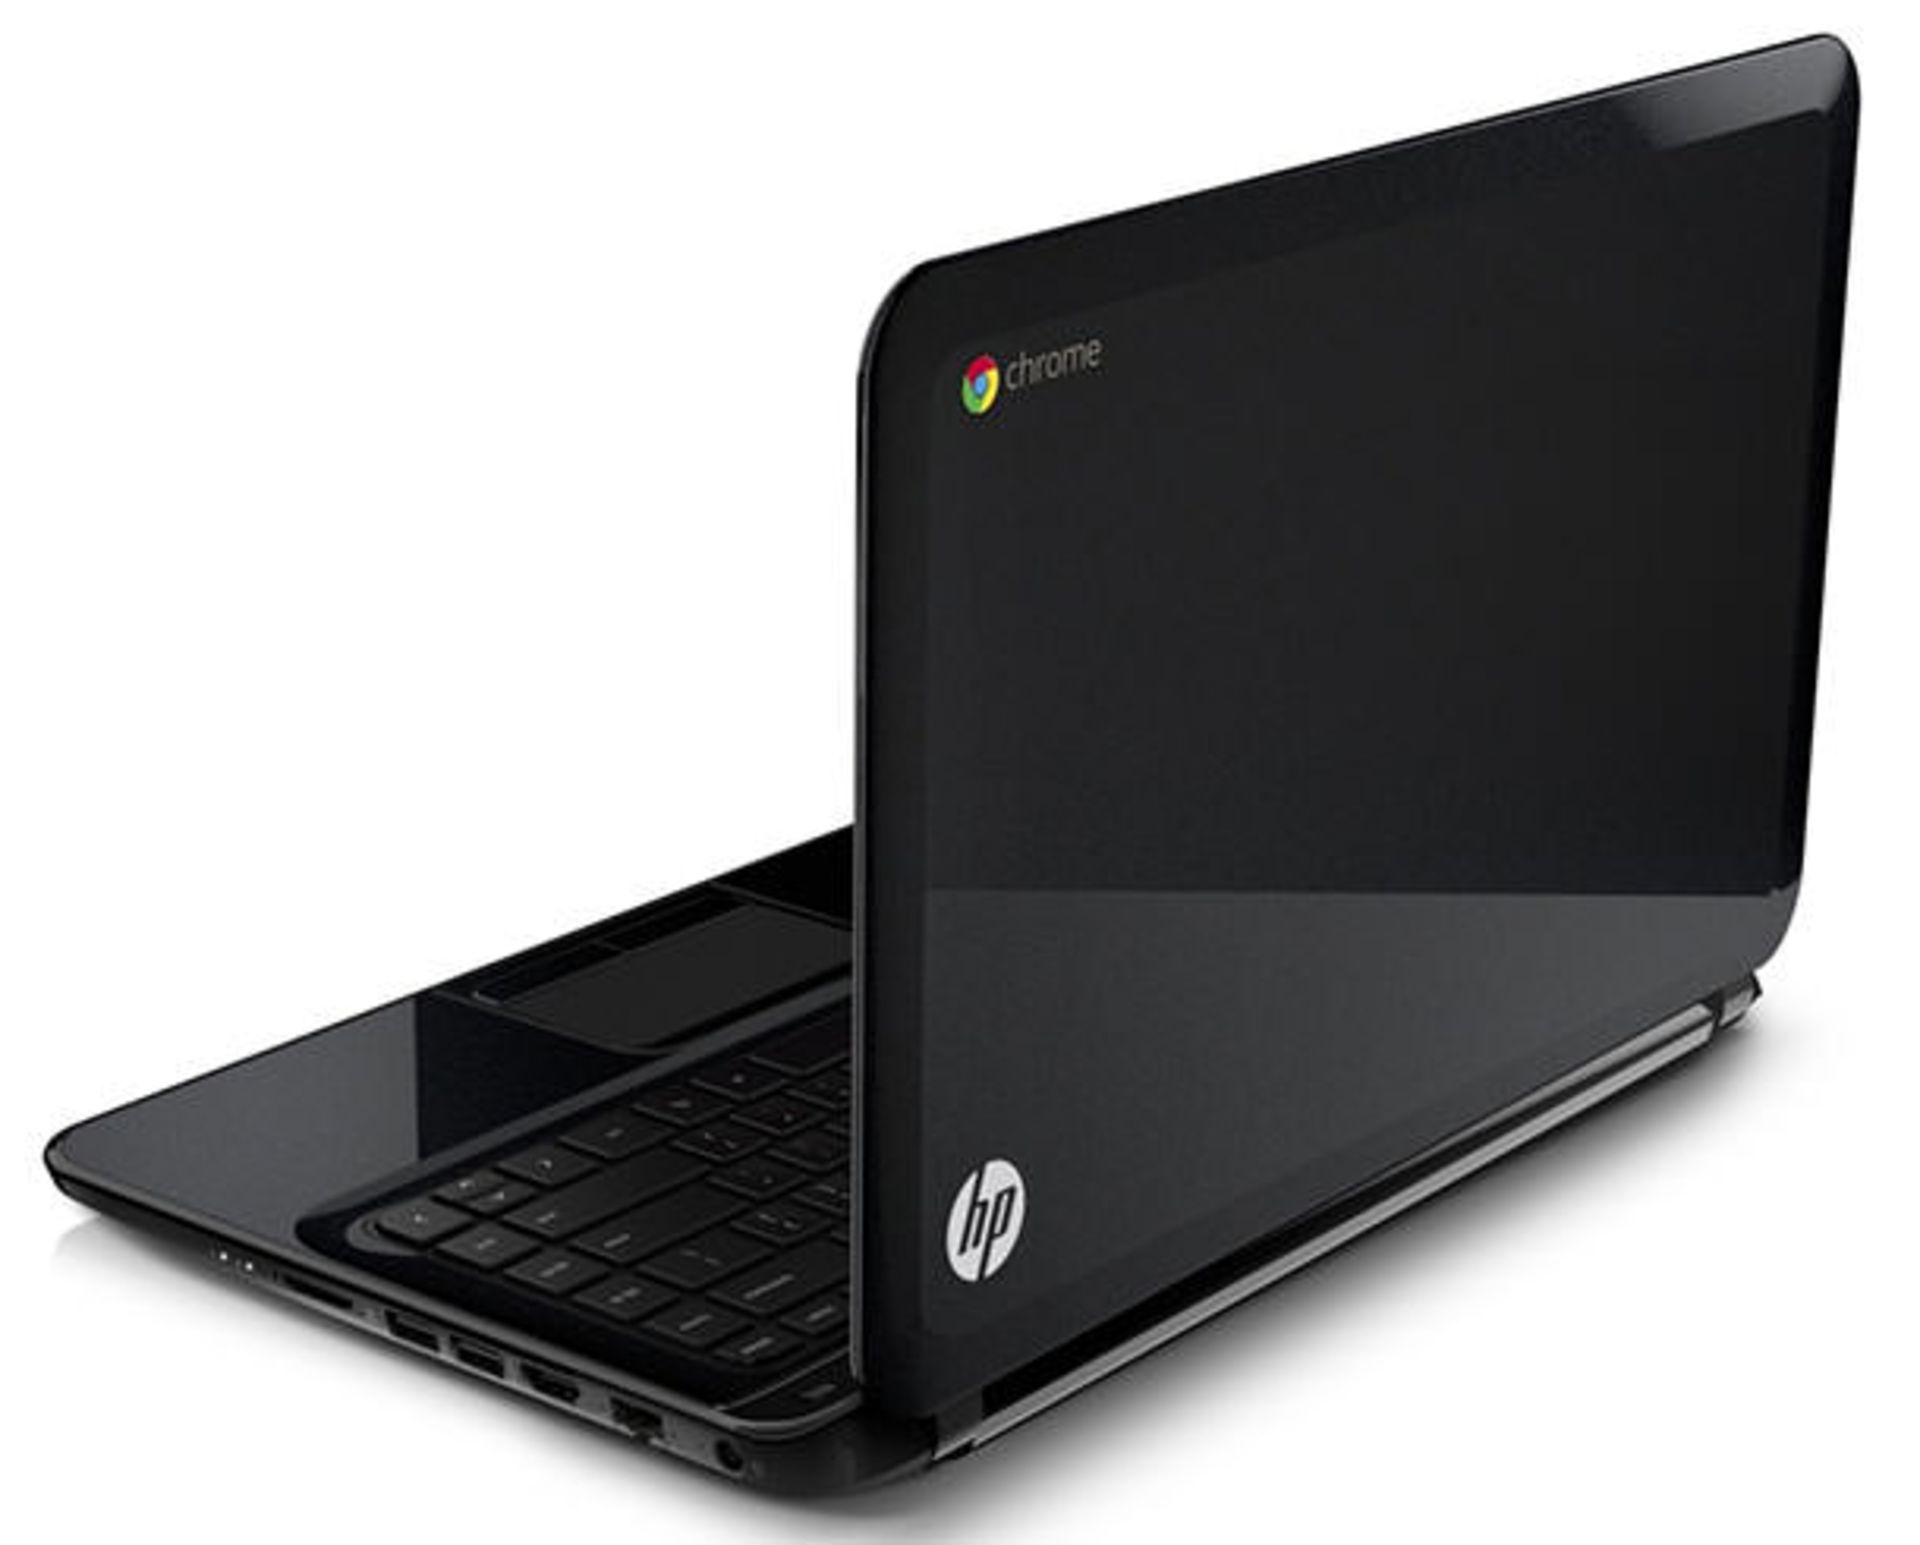 HP Chromebook left-rear facing 1020 verge super wide